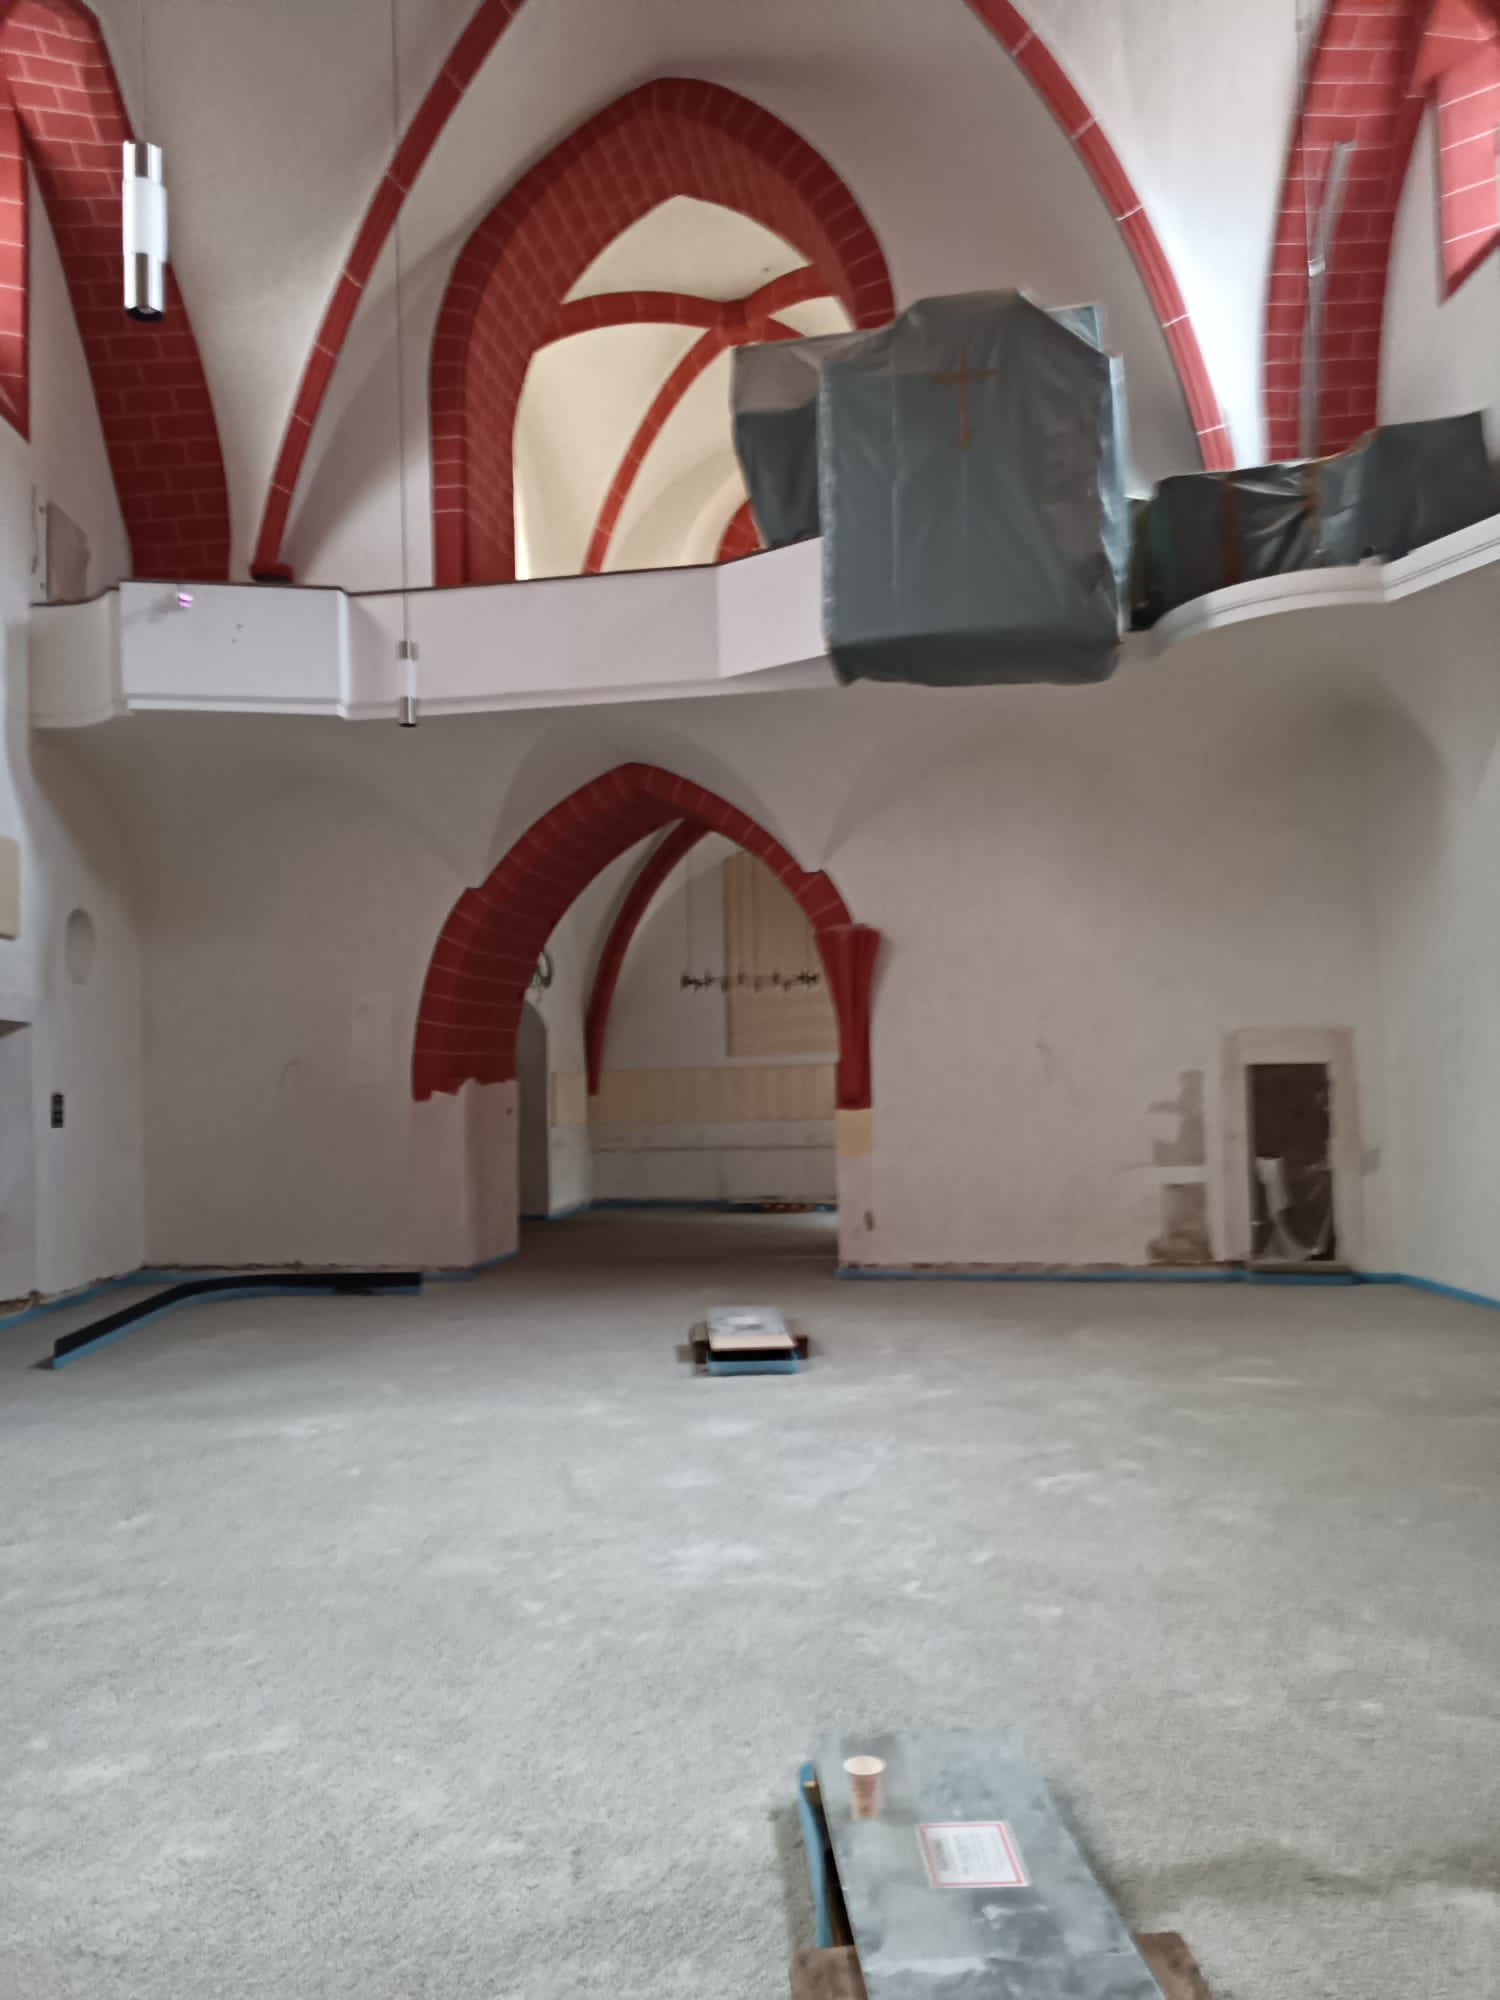 Kirche St. Gangolf in Trier - Fußboden bereit für Verlegung der Bodenfliesen.